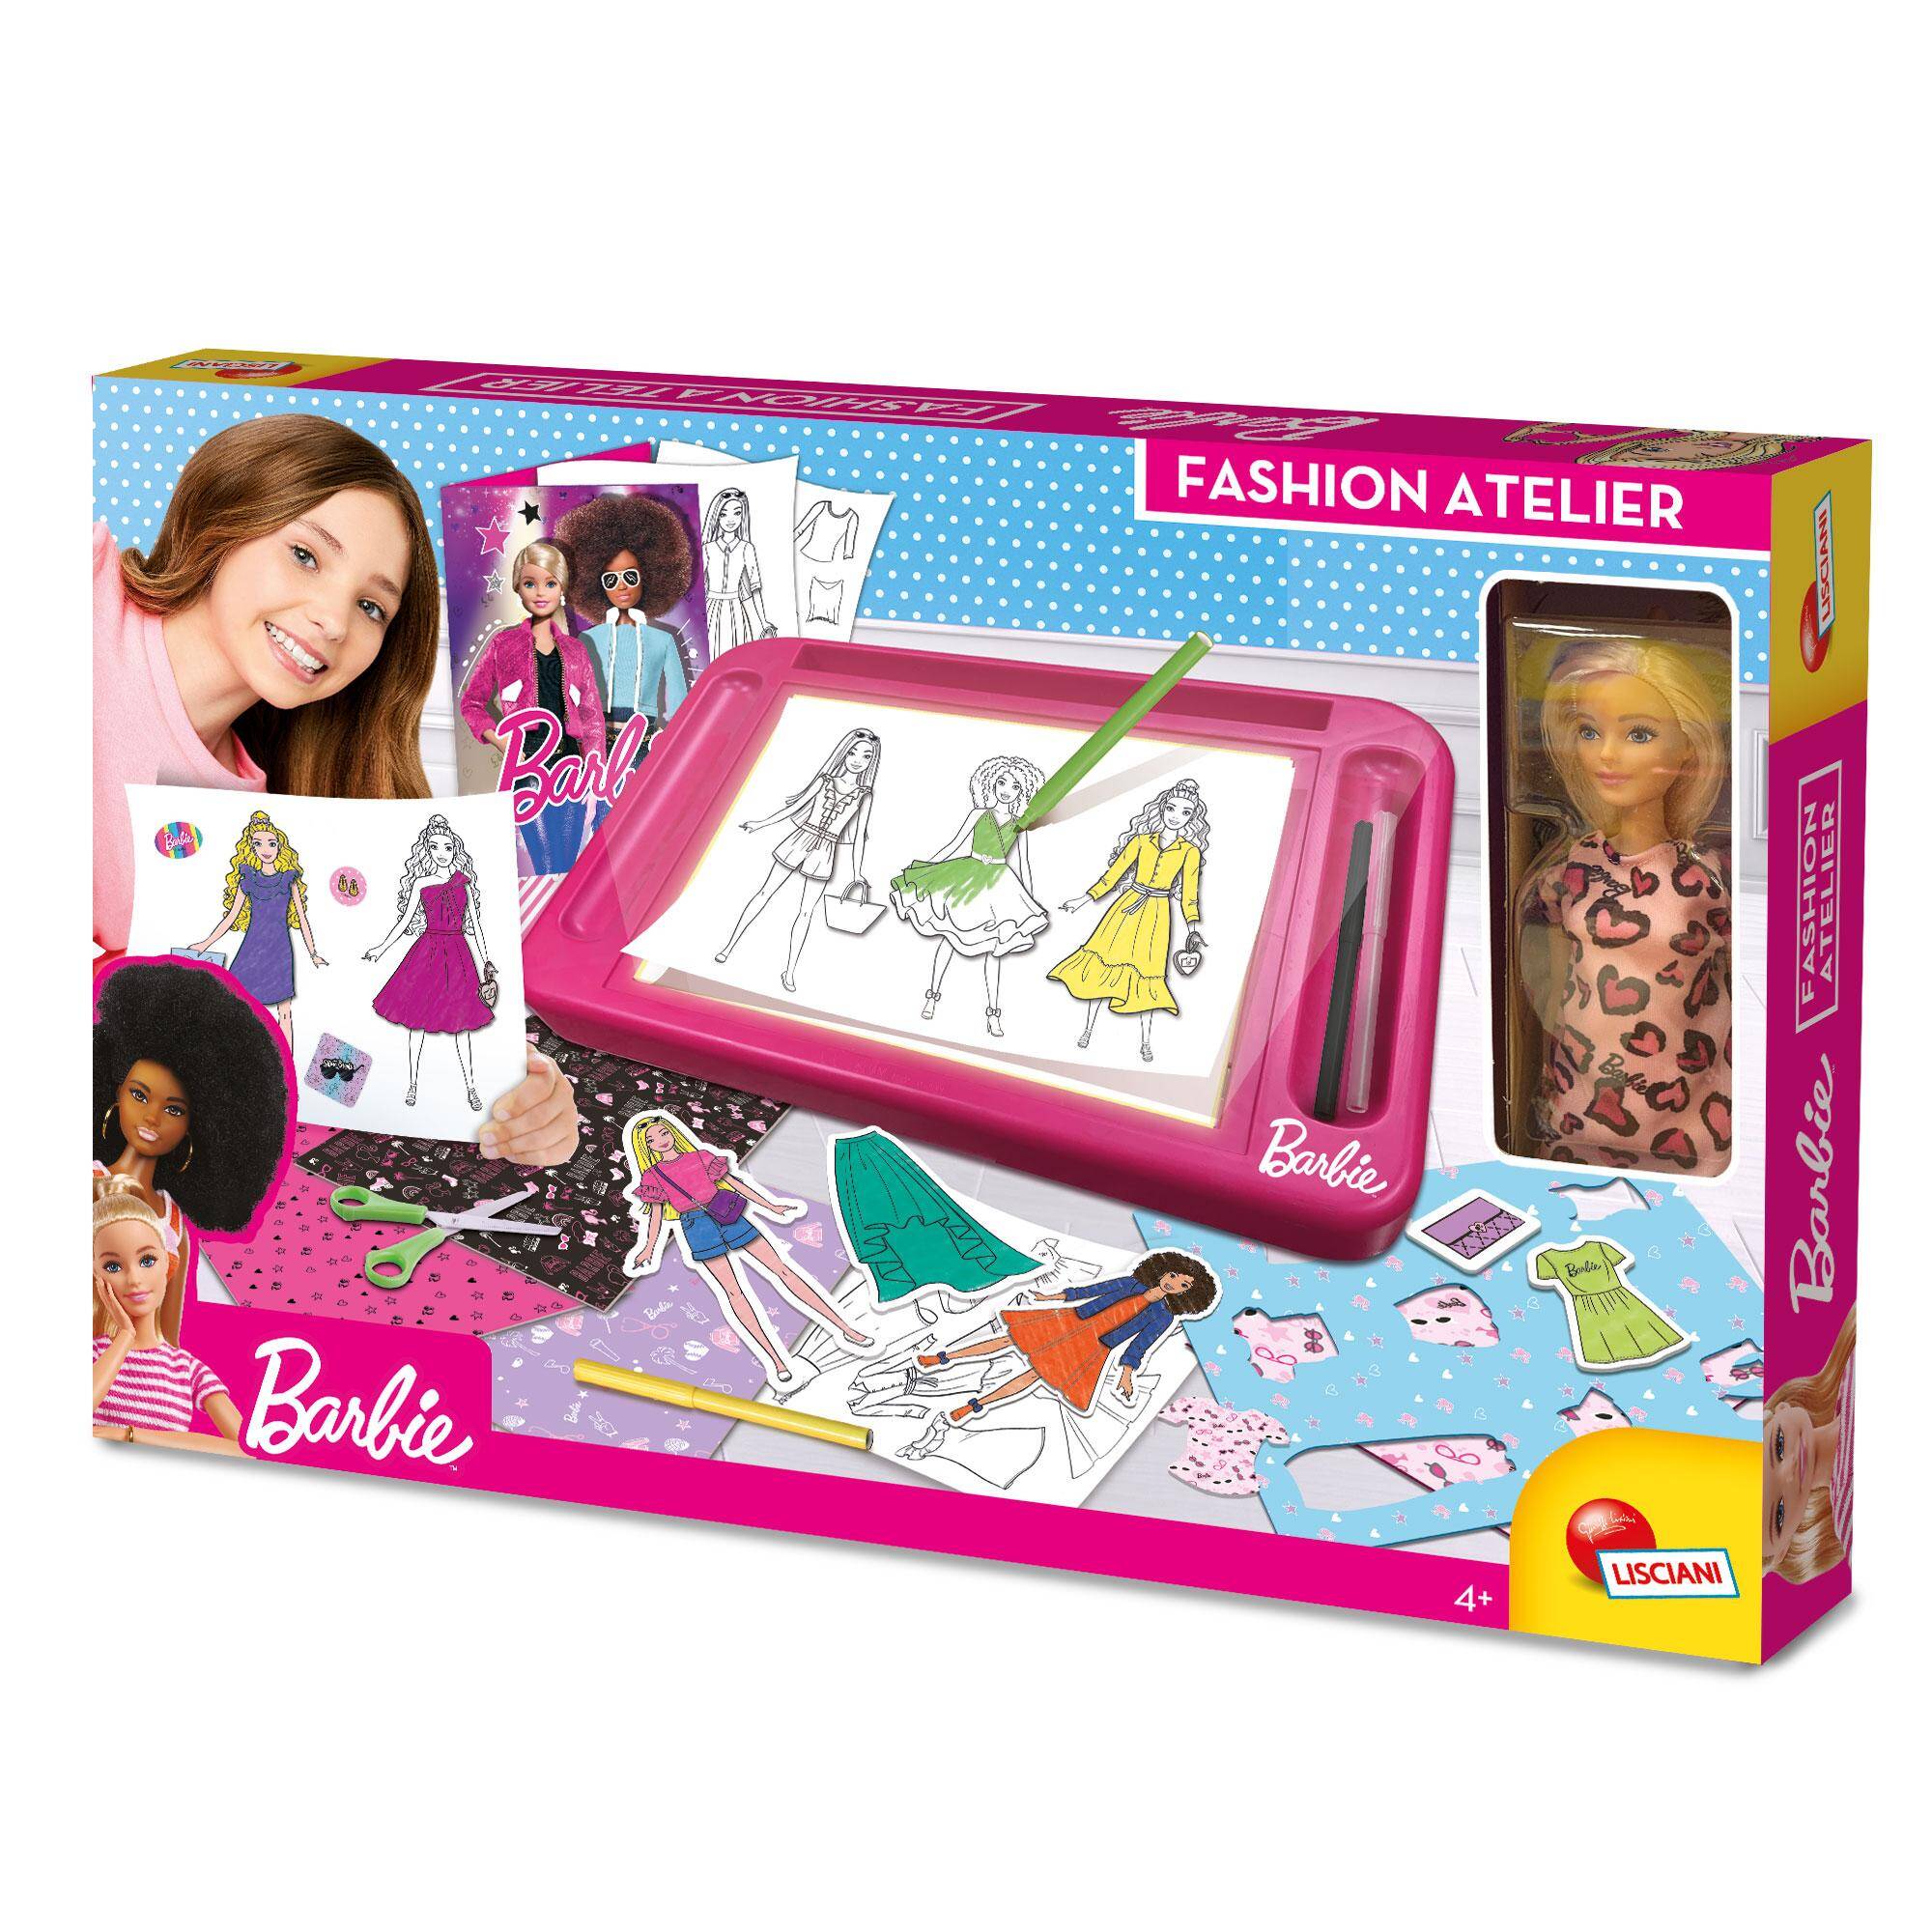 Barbie fashion atelier 304-88645